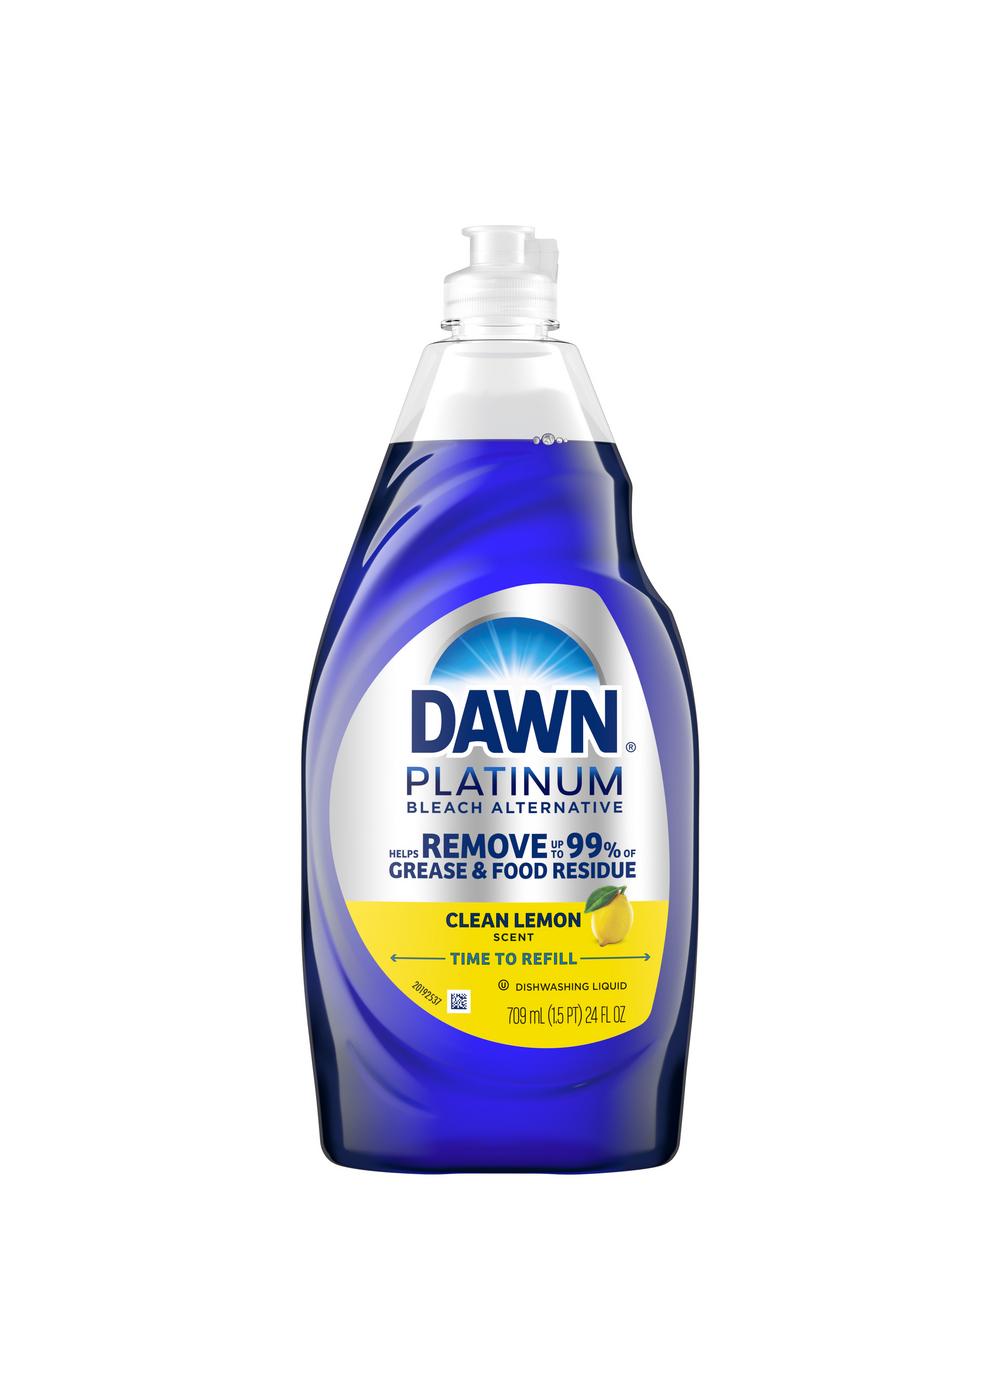 Dawn Platinum Bleach Alternative Clean Lemon Liquid Dish Soap; image 1 of 2